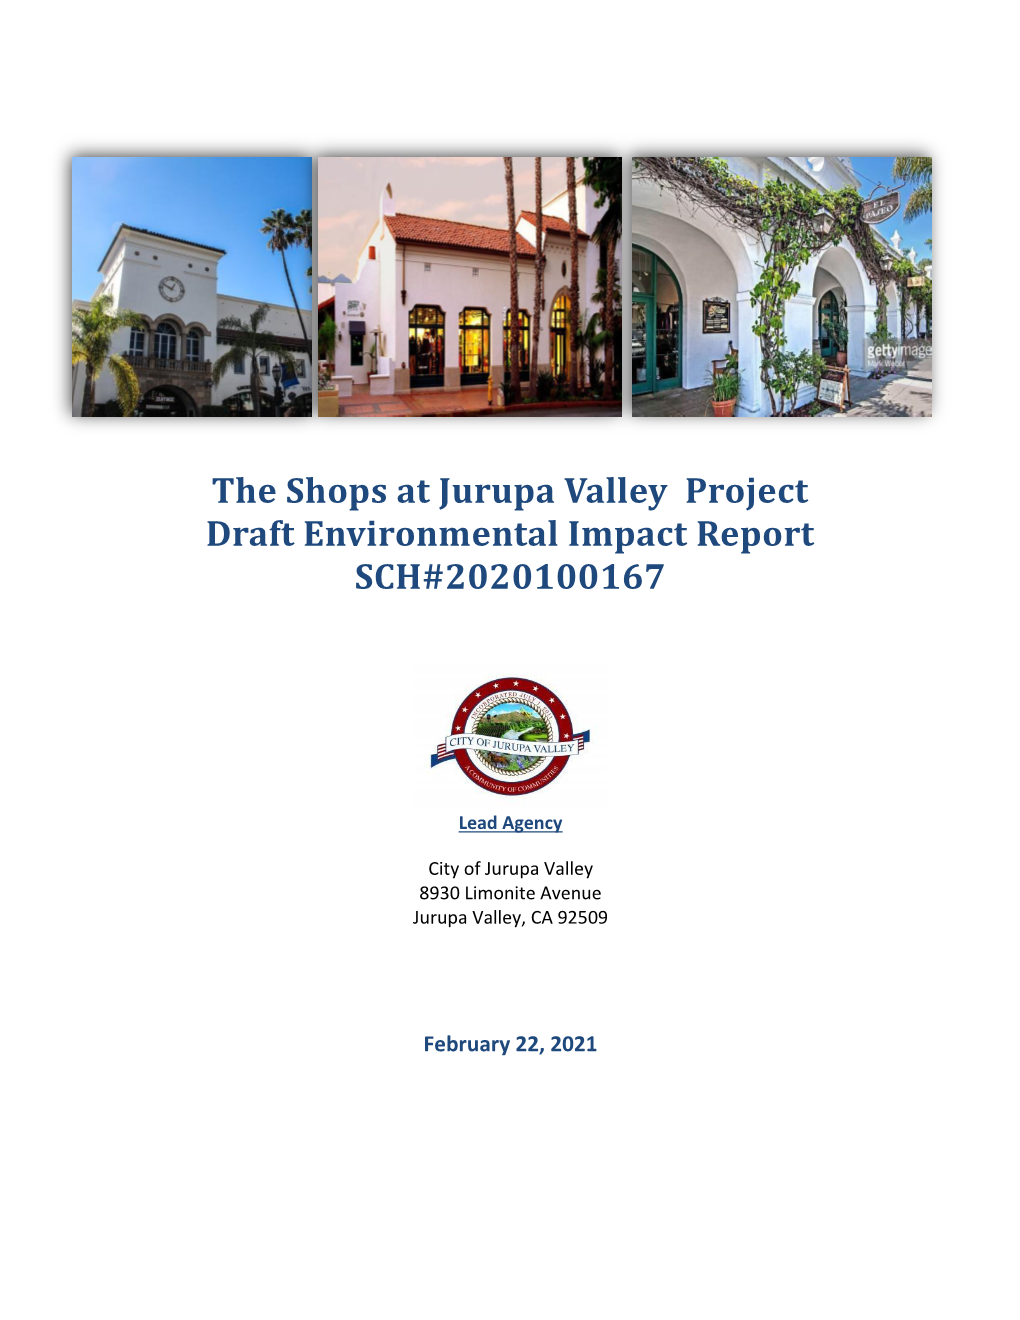 The Shops at Jurupa Valley Project Draft Environmental Impact Report SCH#2020100167